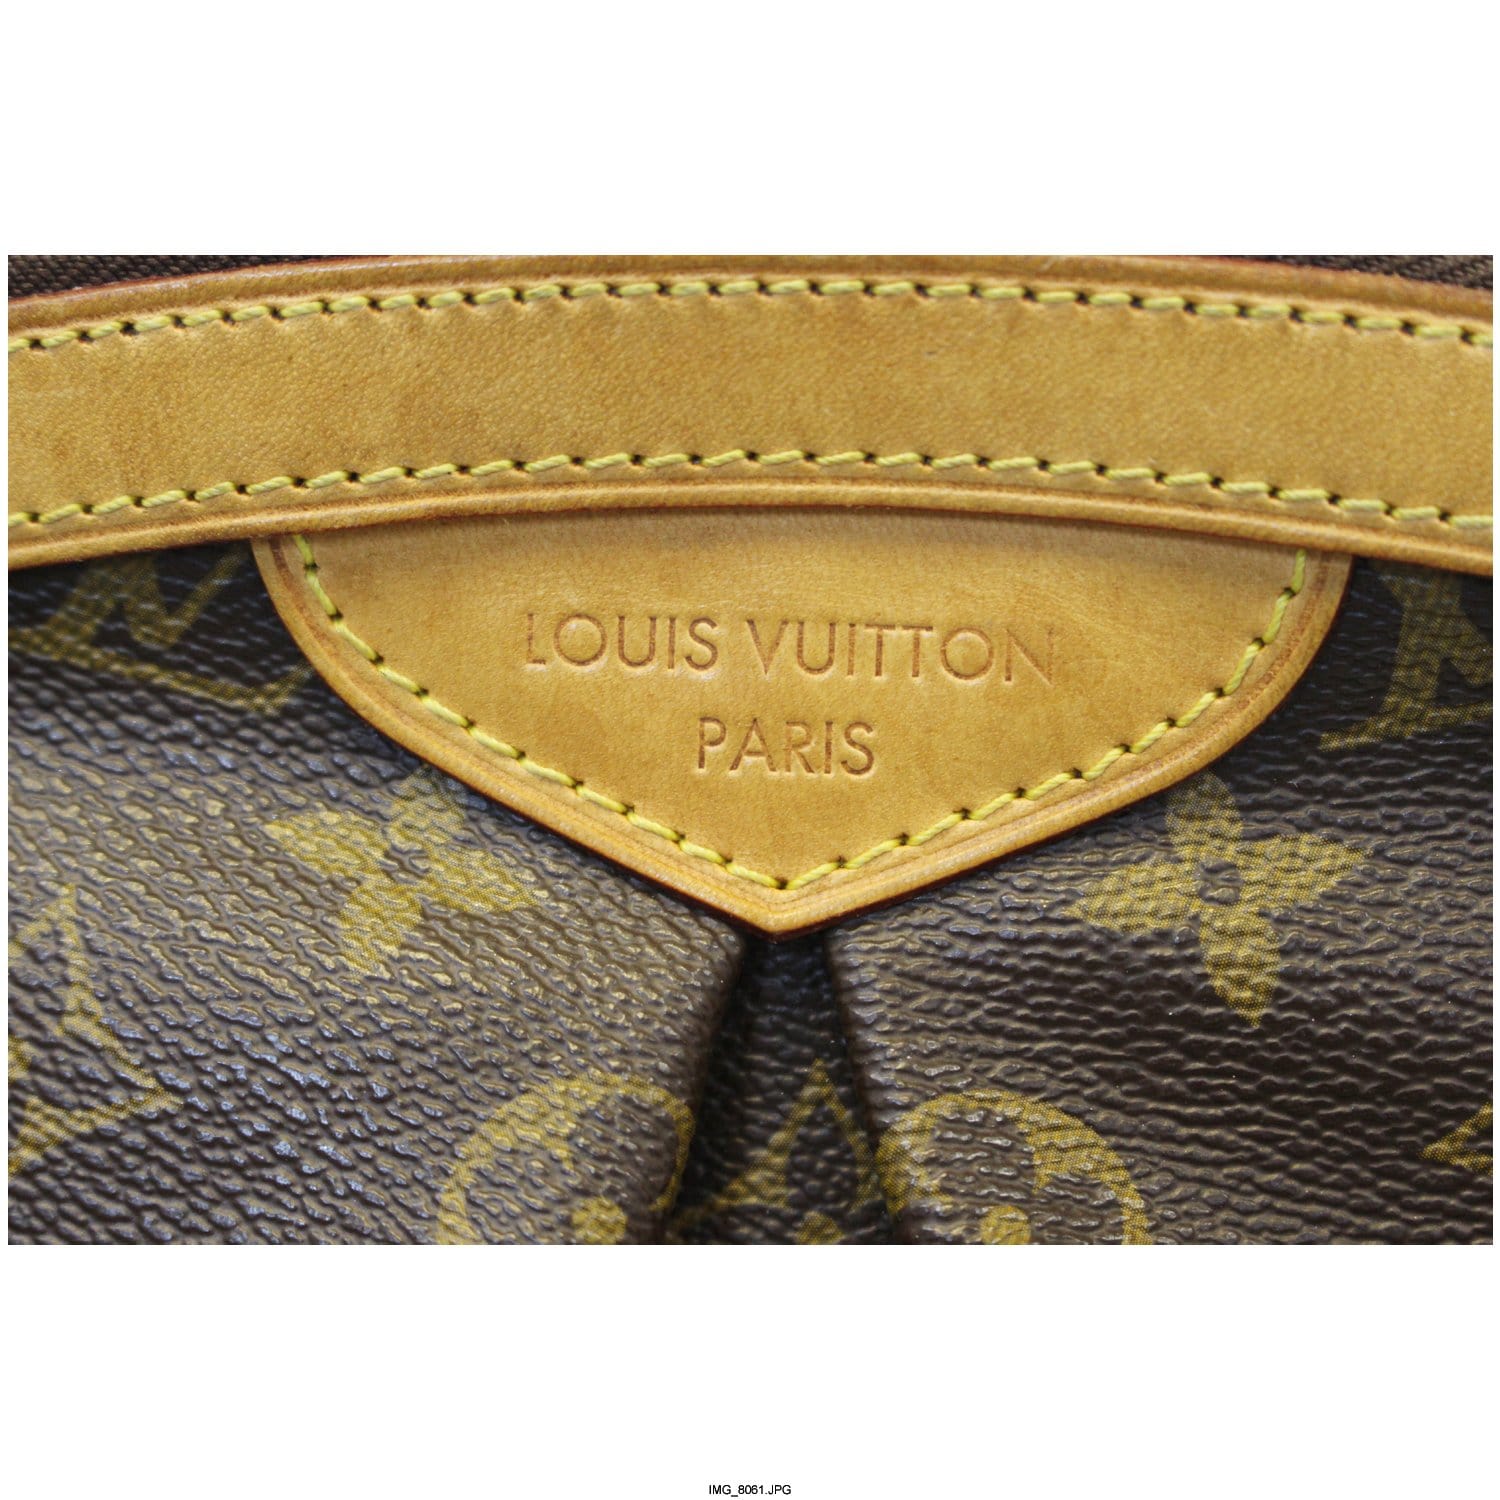 Shopbop Archive Louis Vuitton Tivoli PM, Monogram